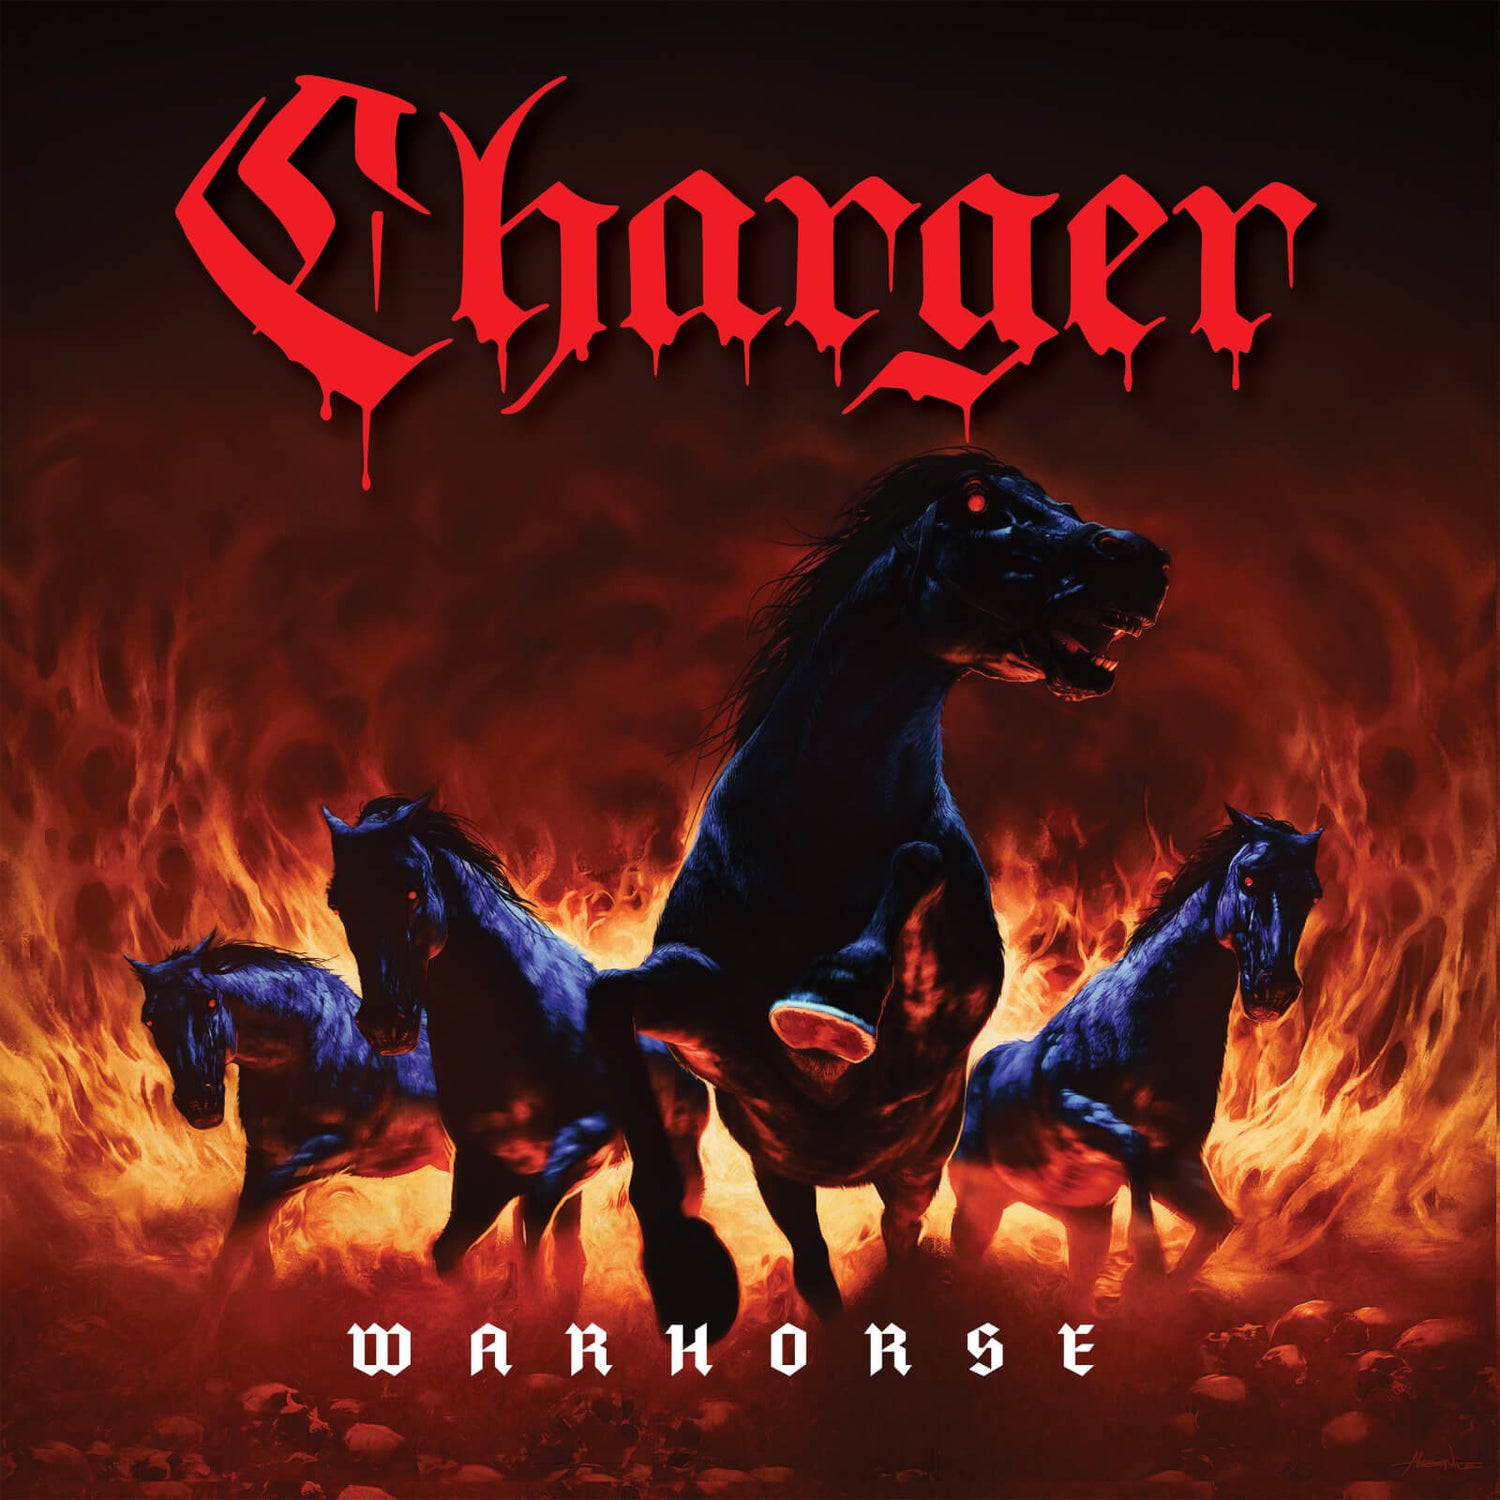 Charger - Warhorse Vinyl